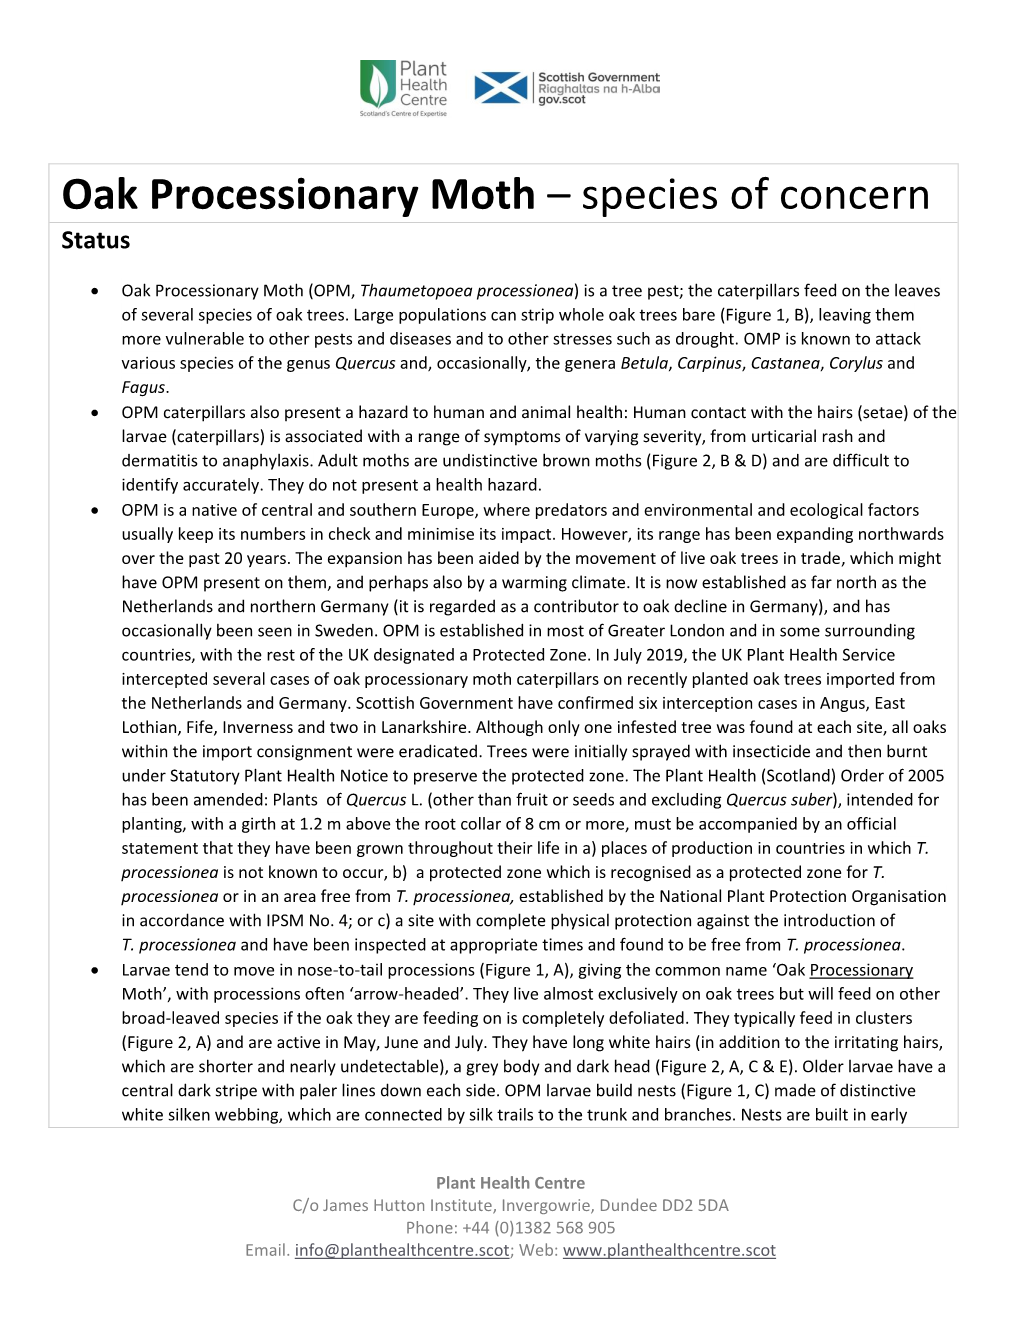 Oak Processionary Moth – Species of Concern Status